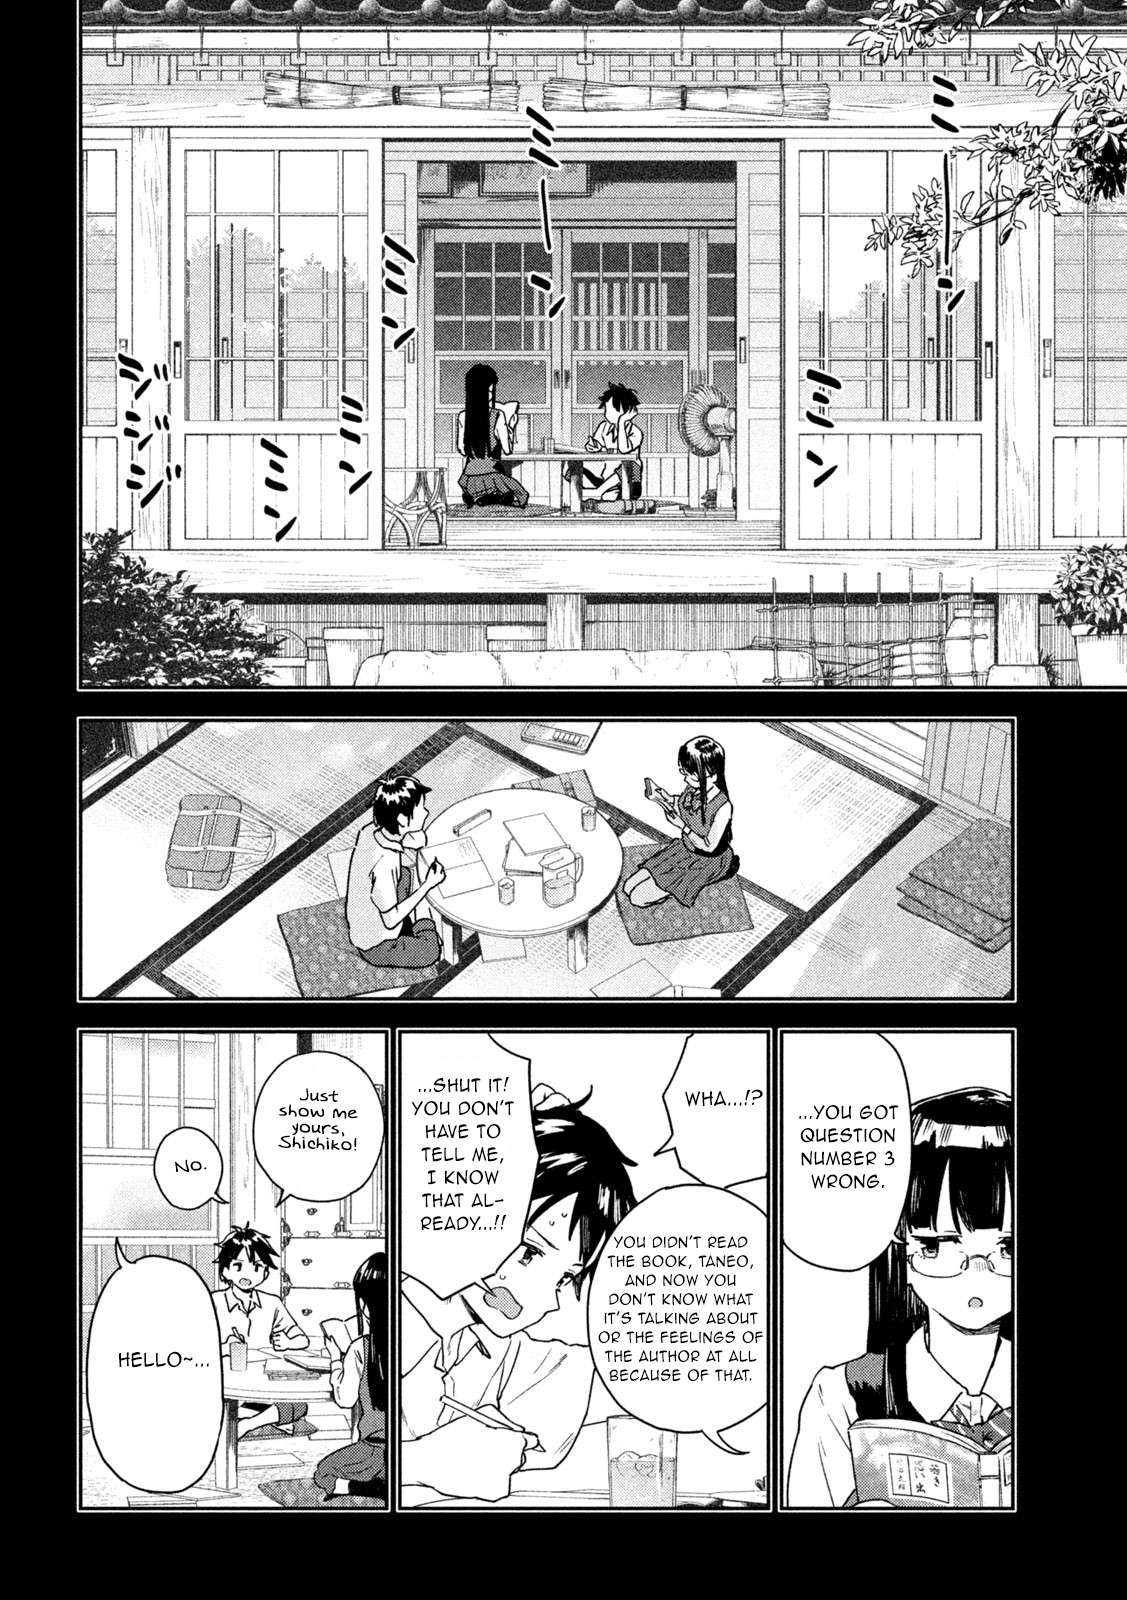 Miyo-Chan Sensei Said So - chapter 11 - #2